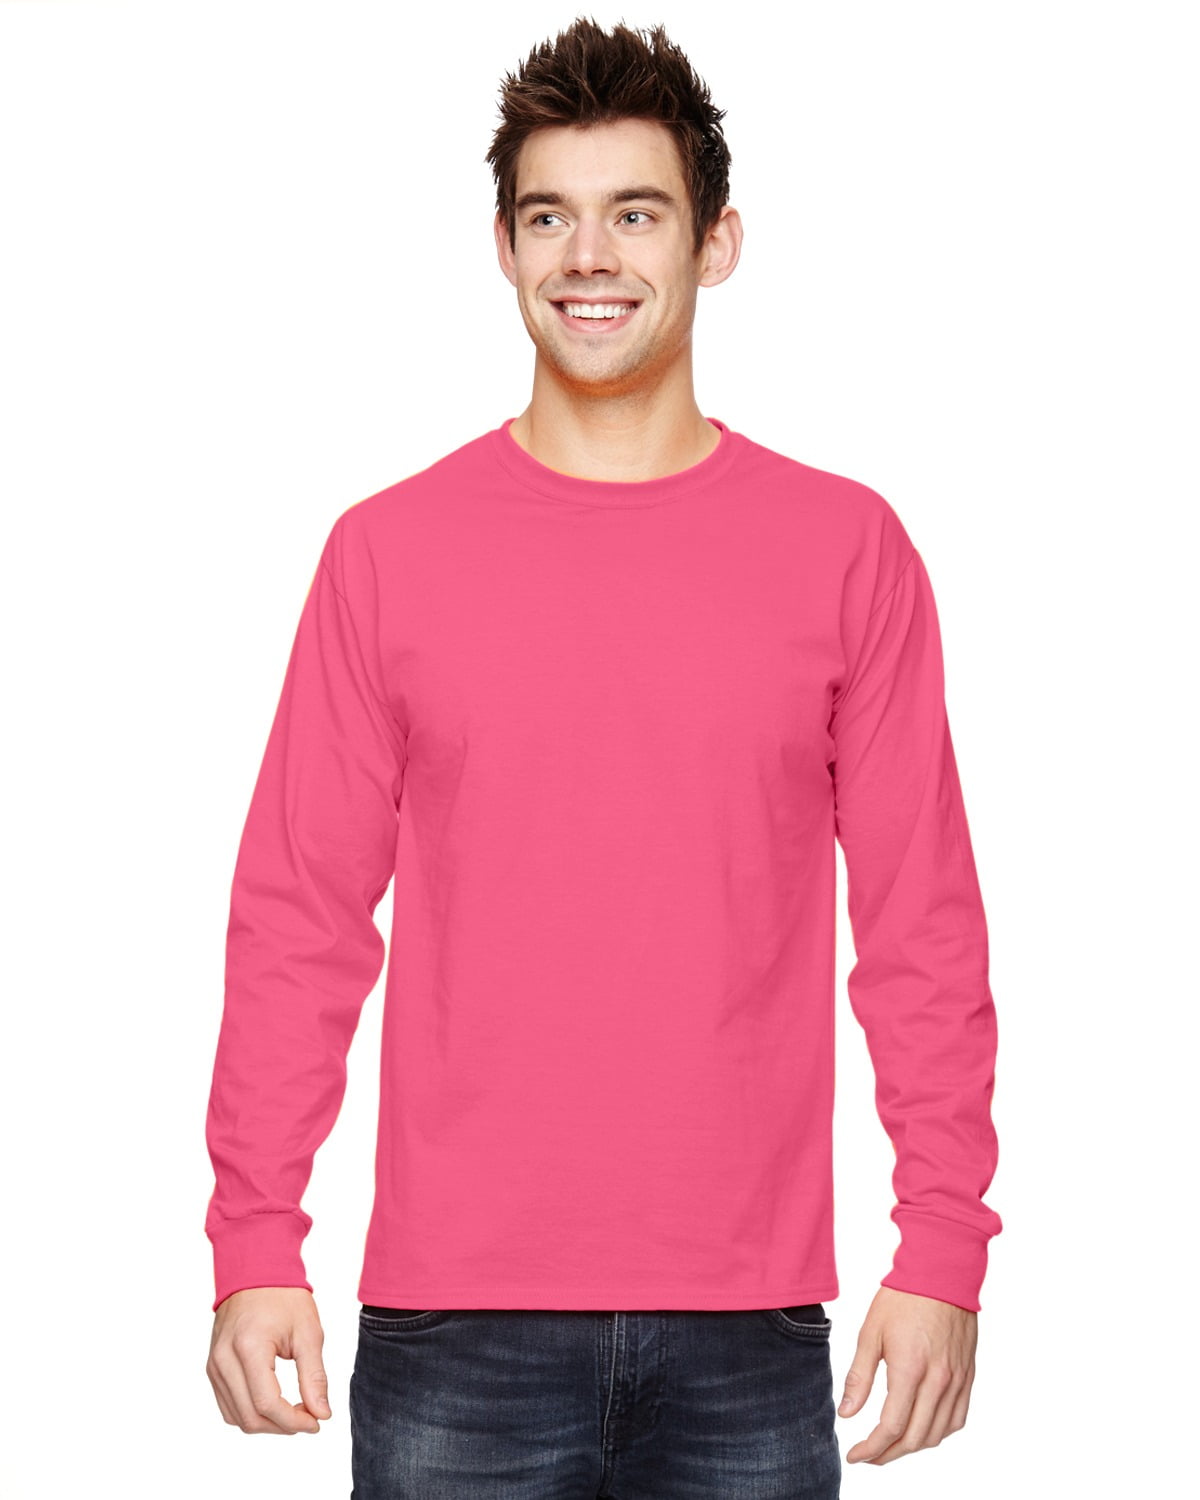 The of the Loom 5 oz HD Cotton Long Sleeve T-Shirt - PINK - S - Walmart.com